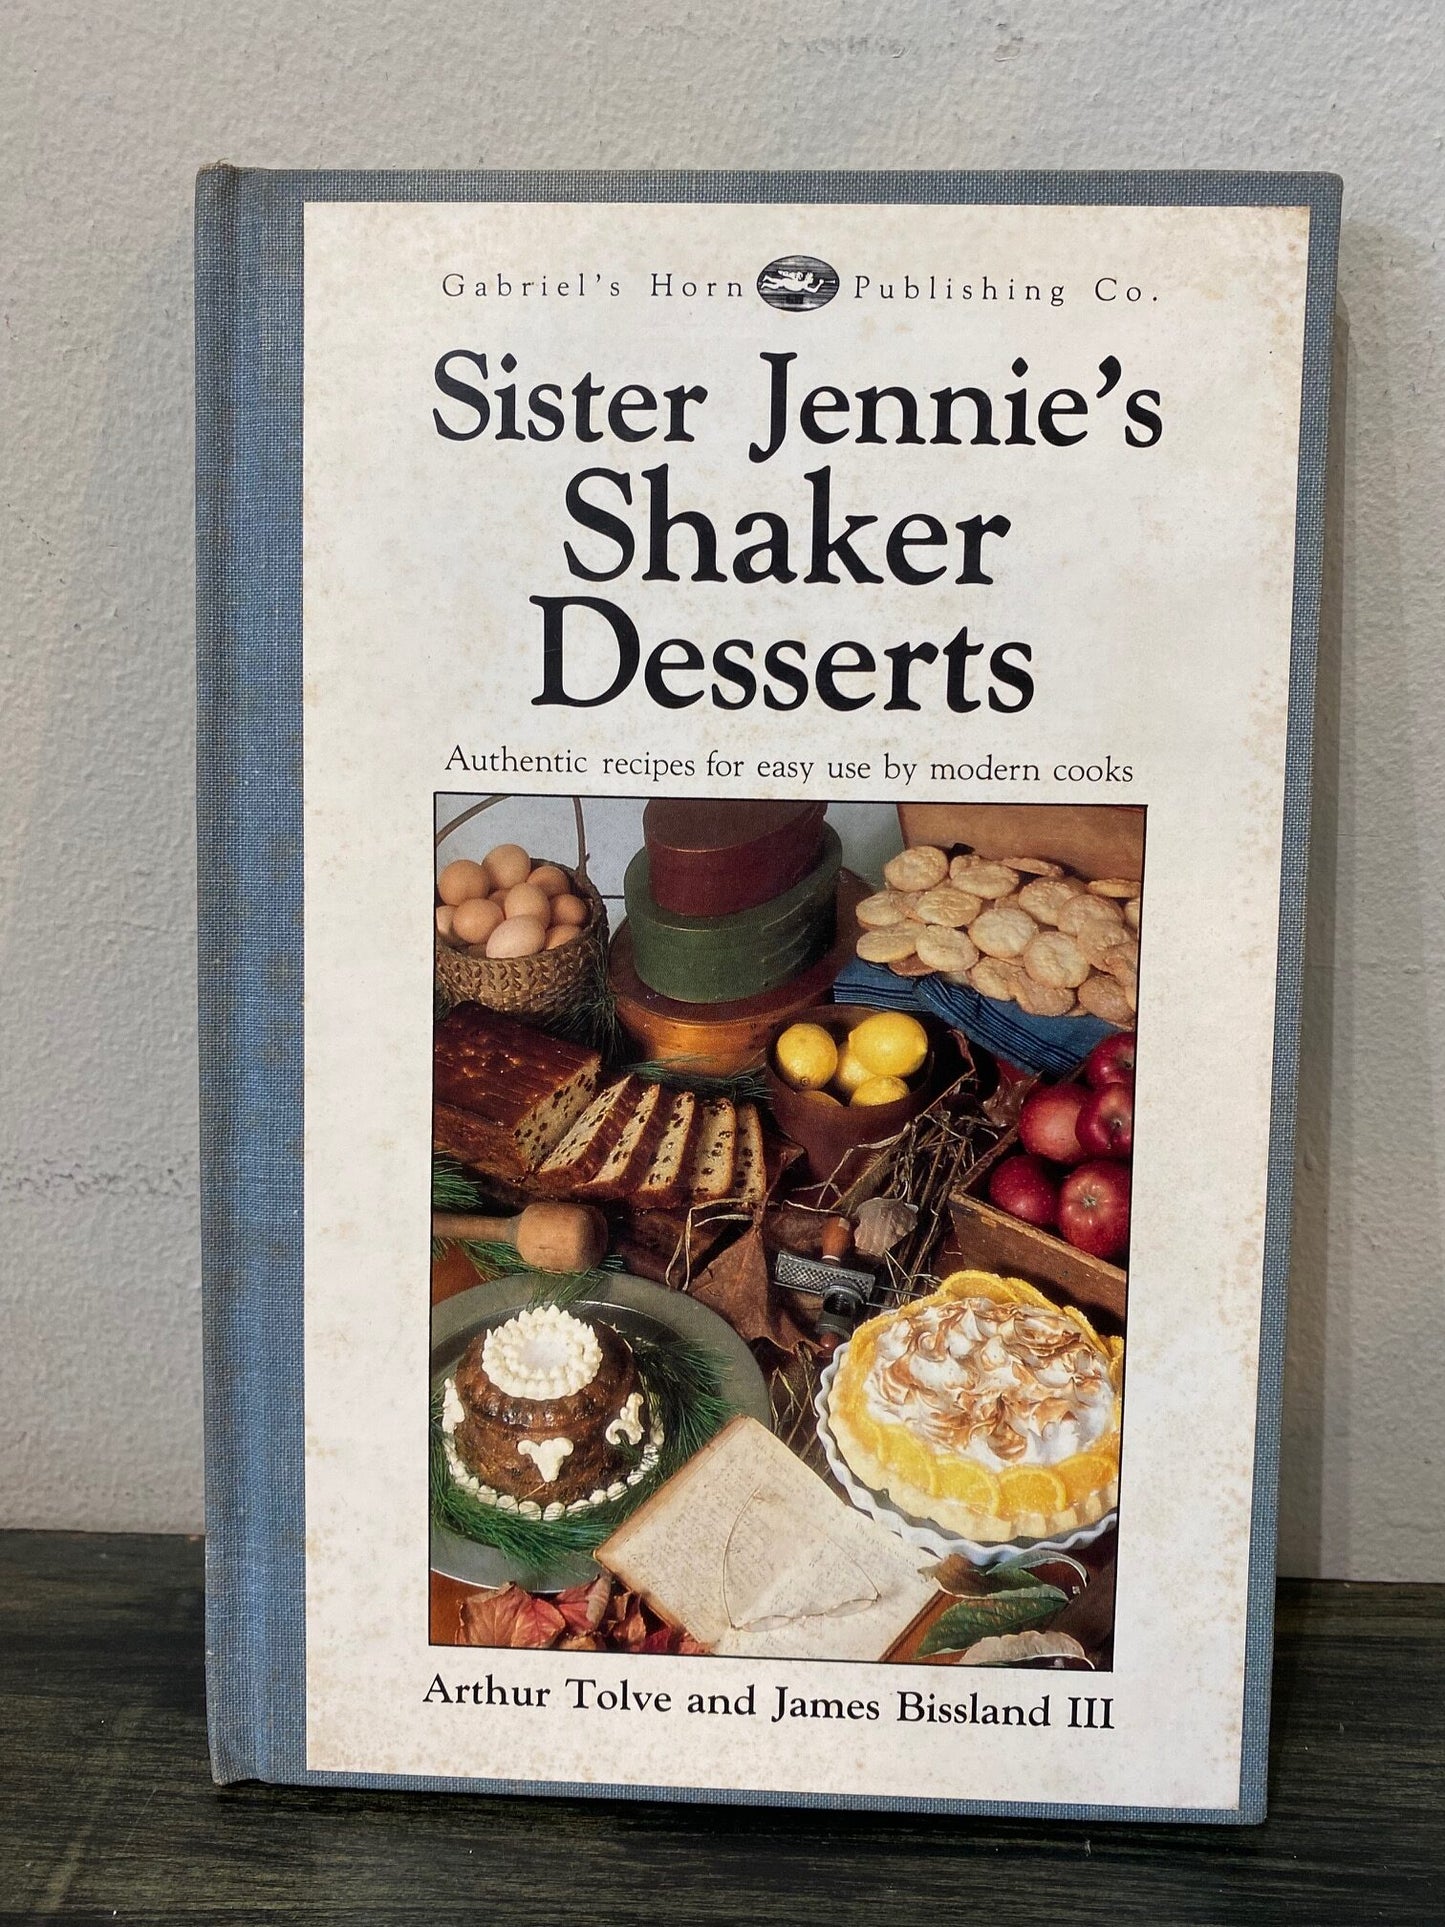 Sister Jennie's Shaker Desserts